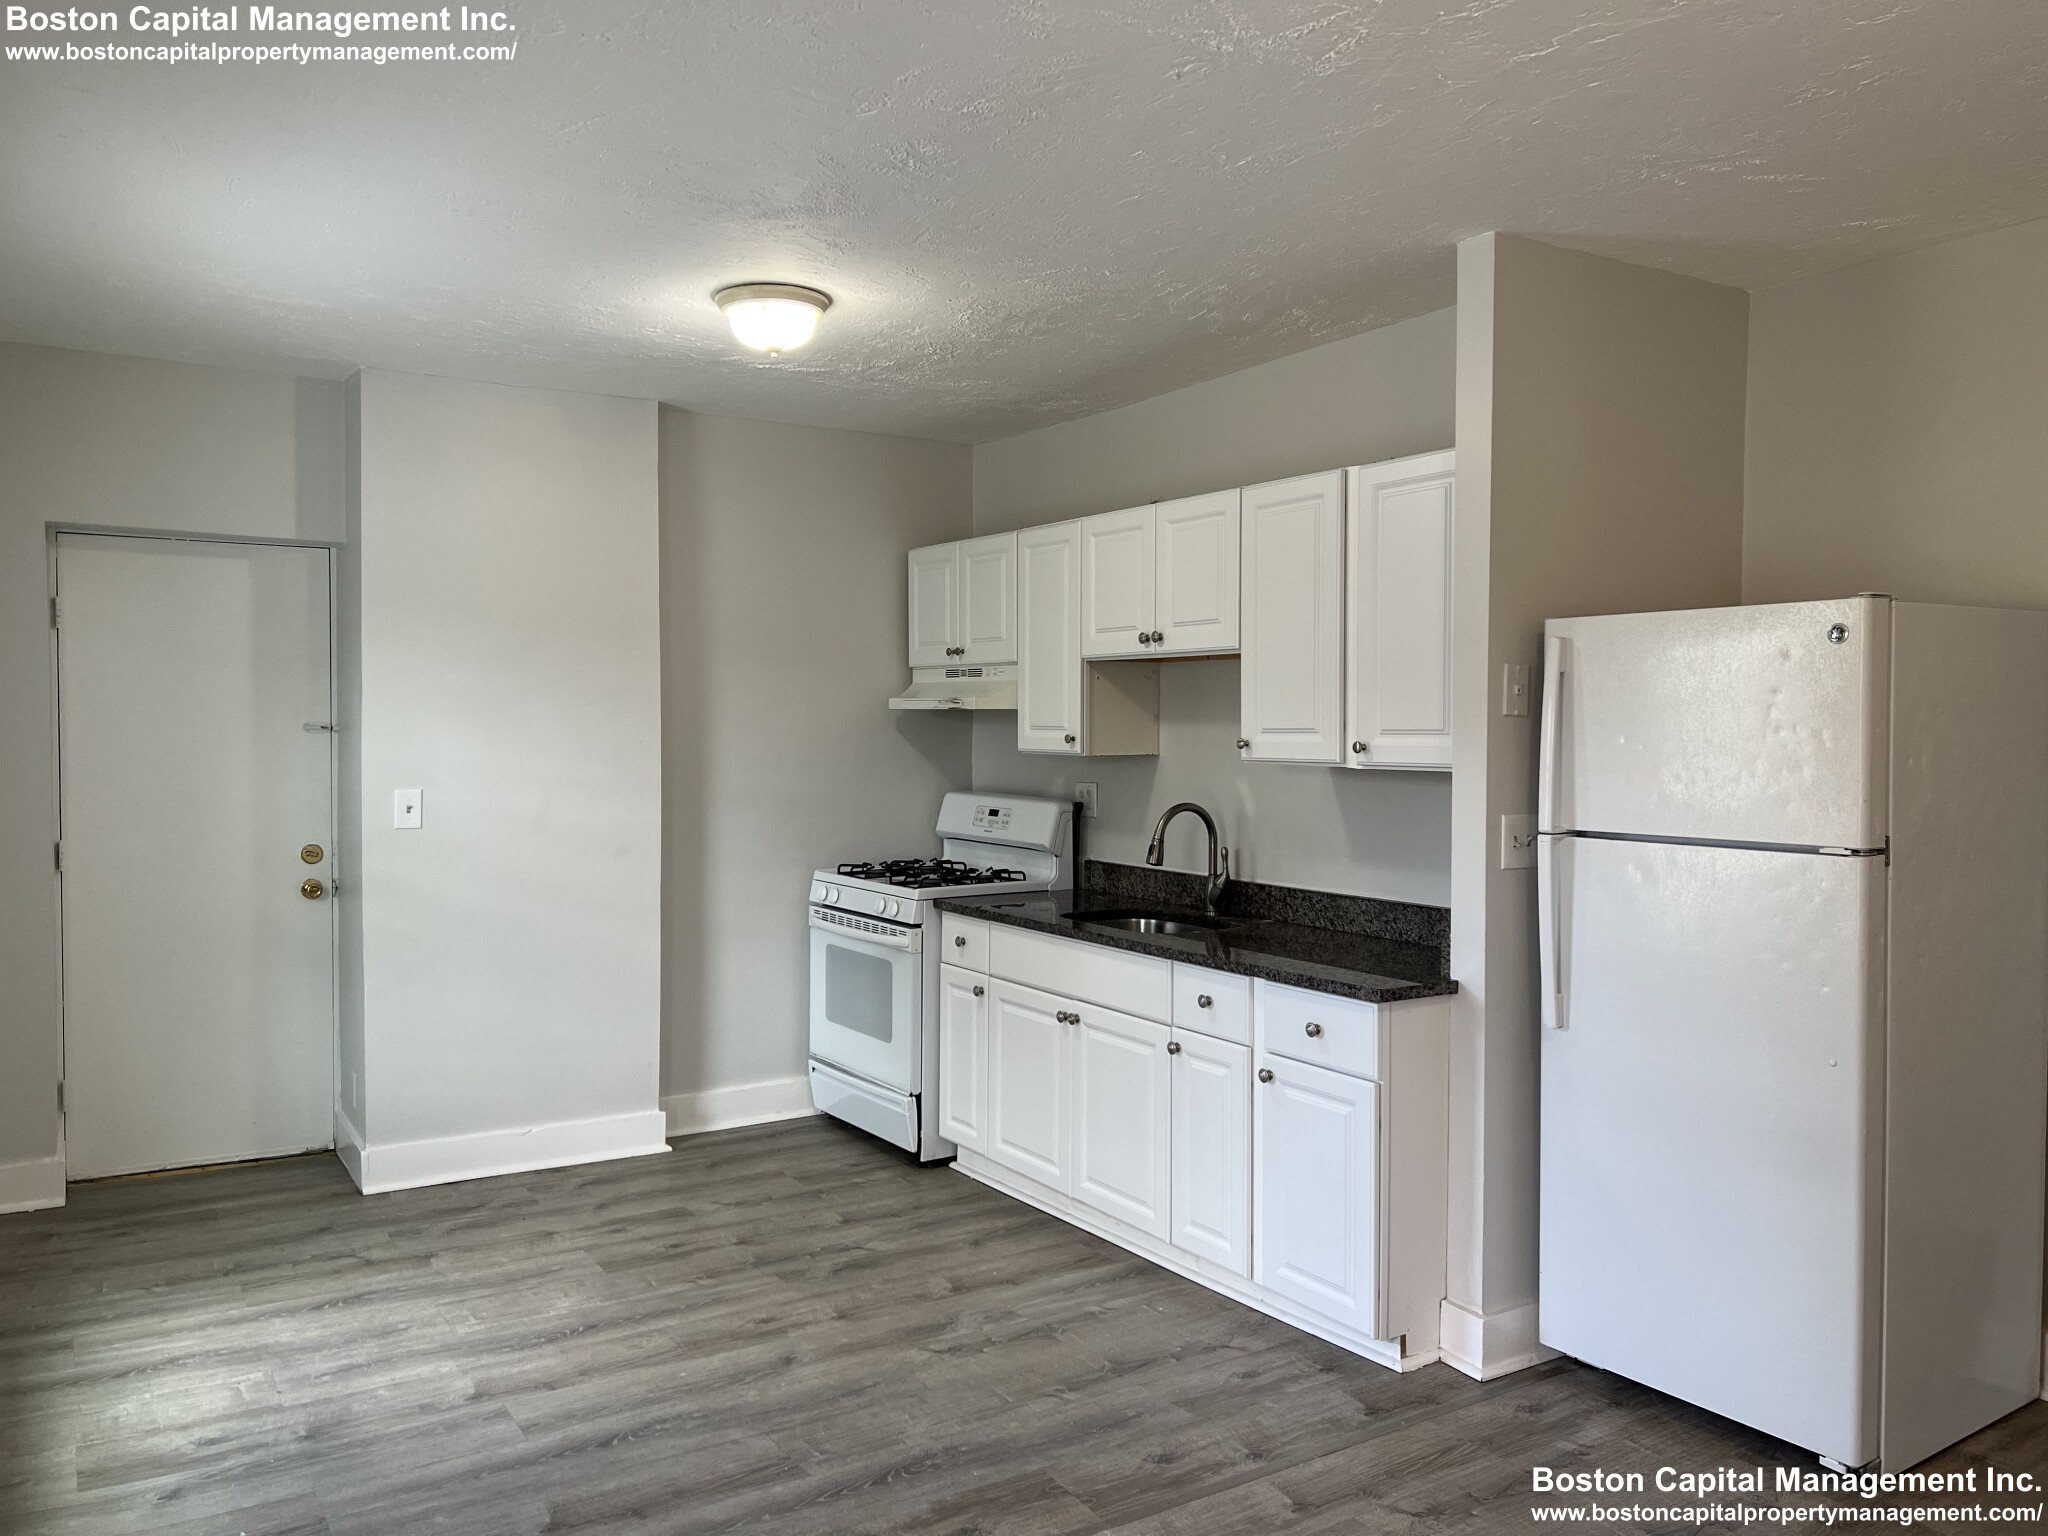 Photos of apartment on Bellingham,Everett MA 02149